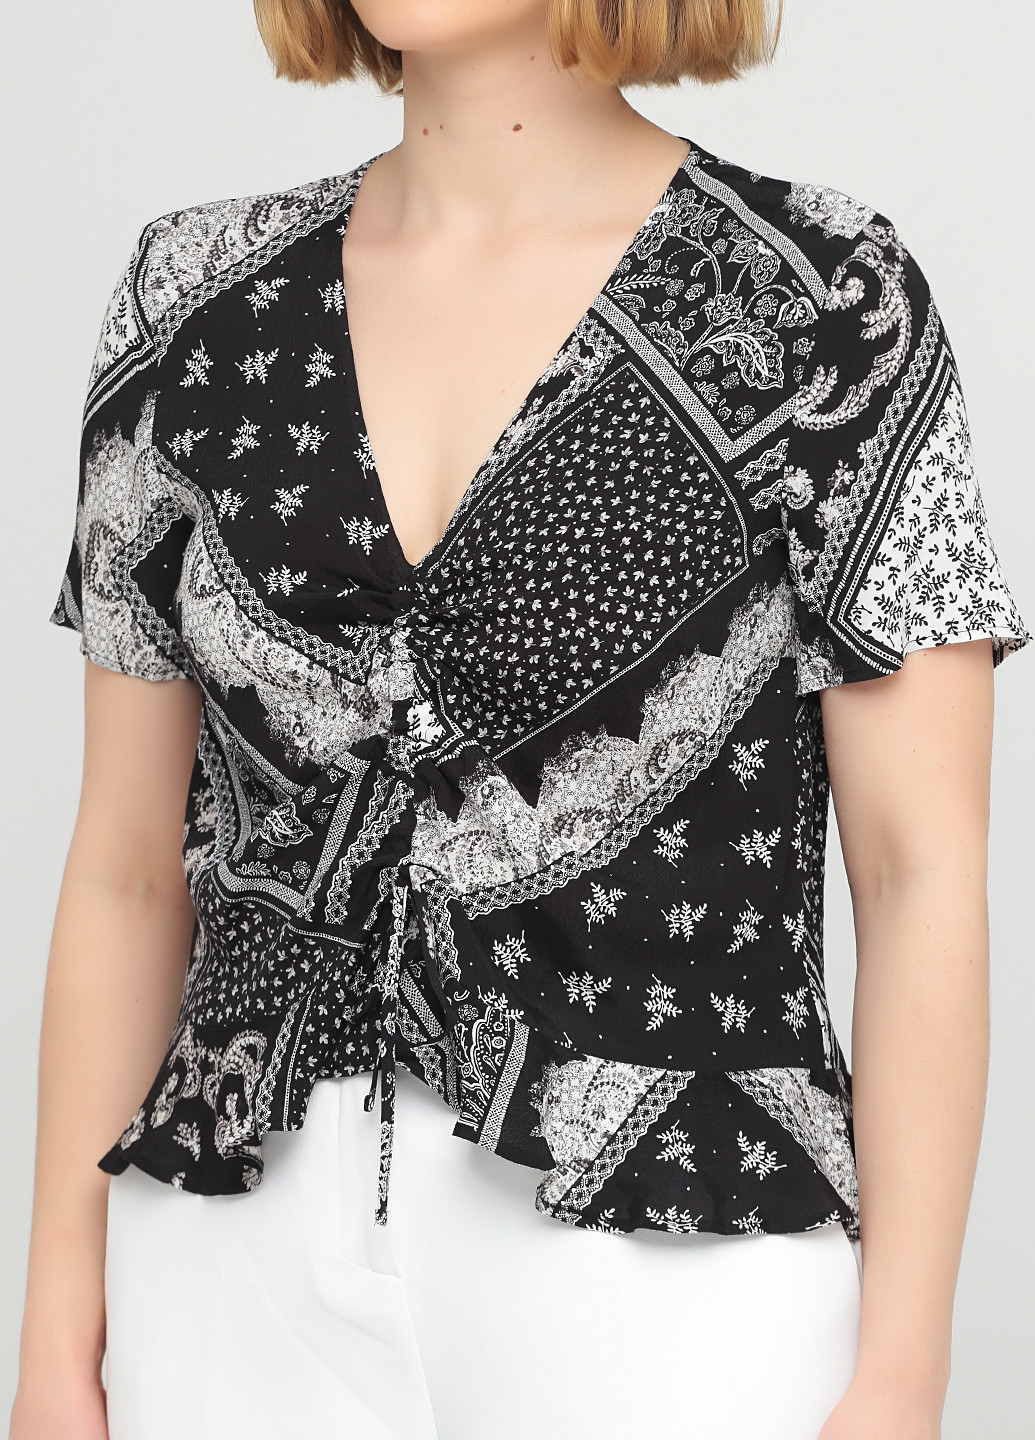 Чорно-біла літня блуза H&M